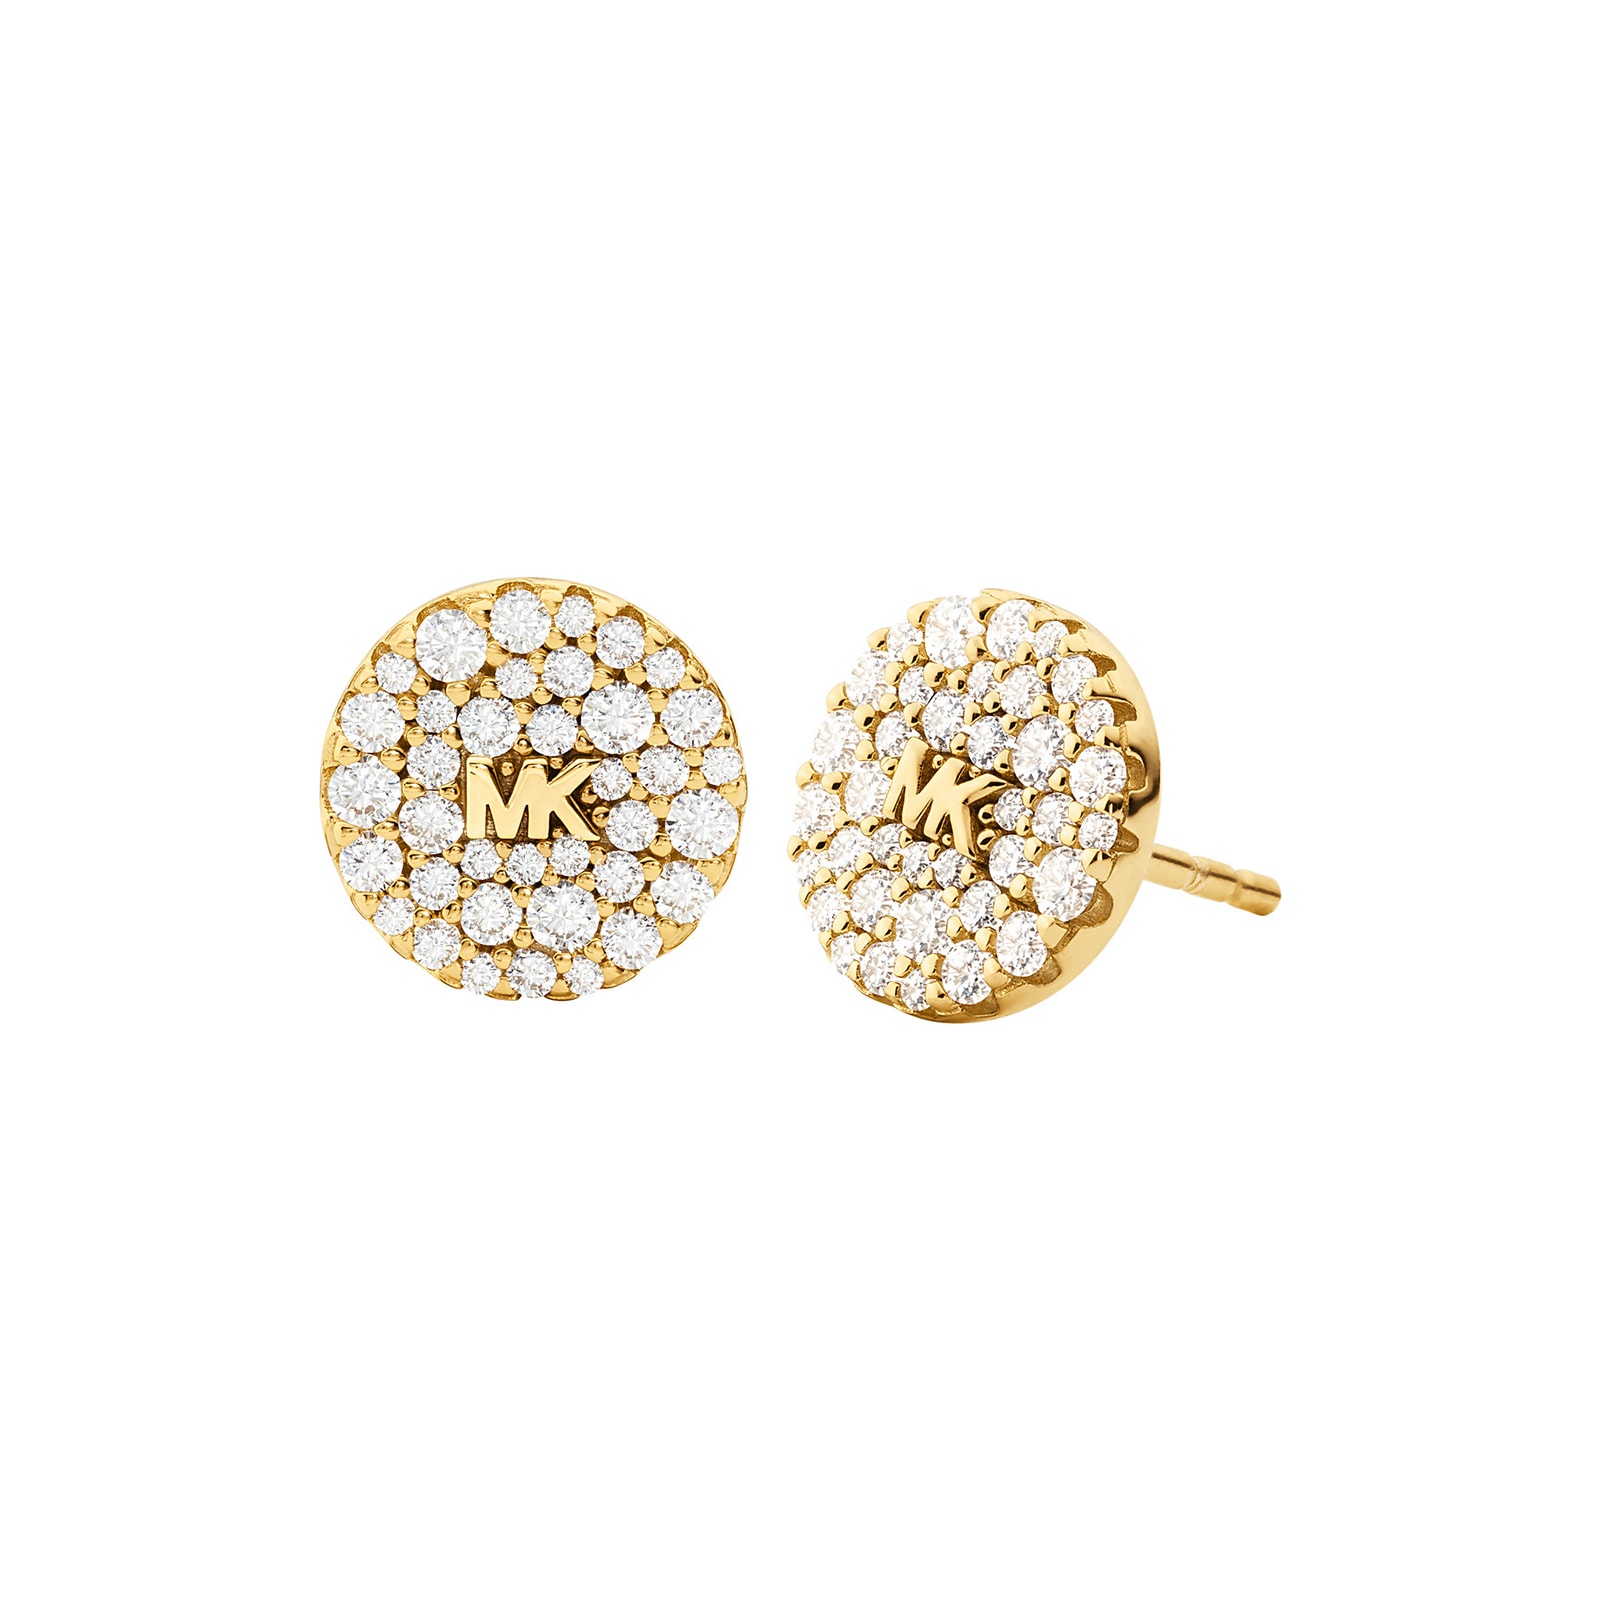 Amazoncom Michael Kors Gold Modern Brilliance Post Stud Earrings  Clothing Shoes  Jewelry